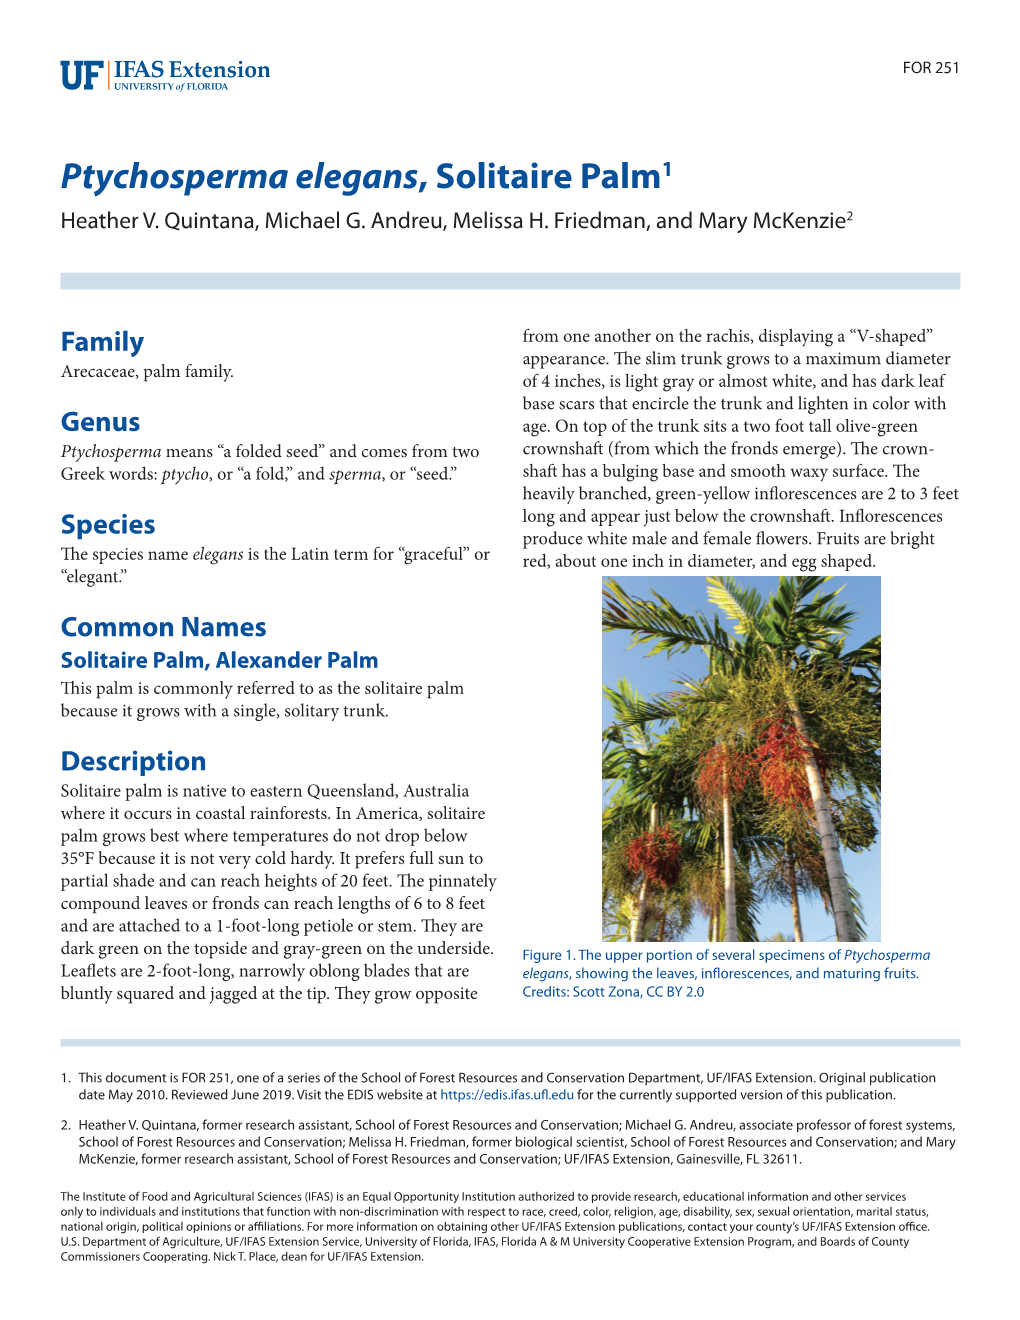 Ptychosperma Elegans, Solitaire Palm1 Heather V